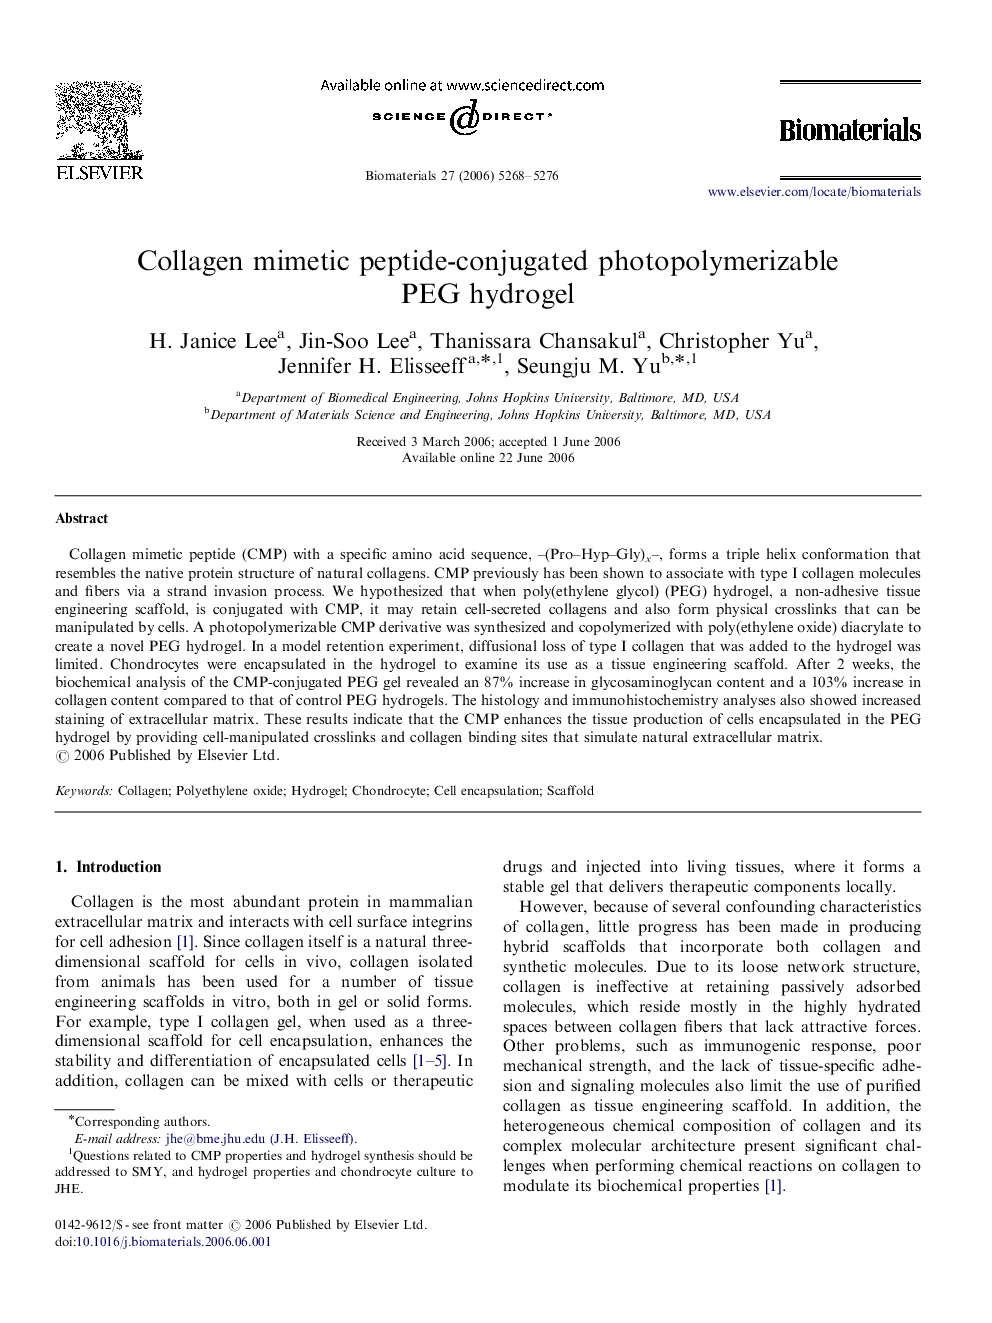 Collagen mimetic peptide-conjugated photopolymerizable PEG hydrogel